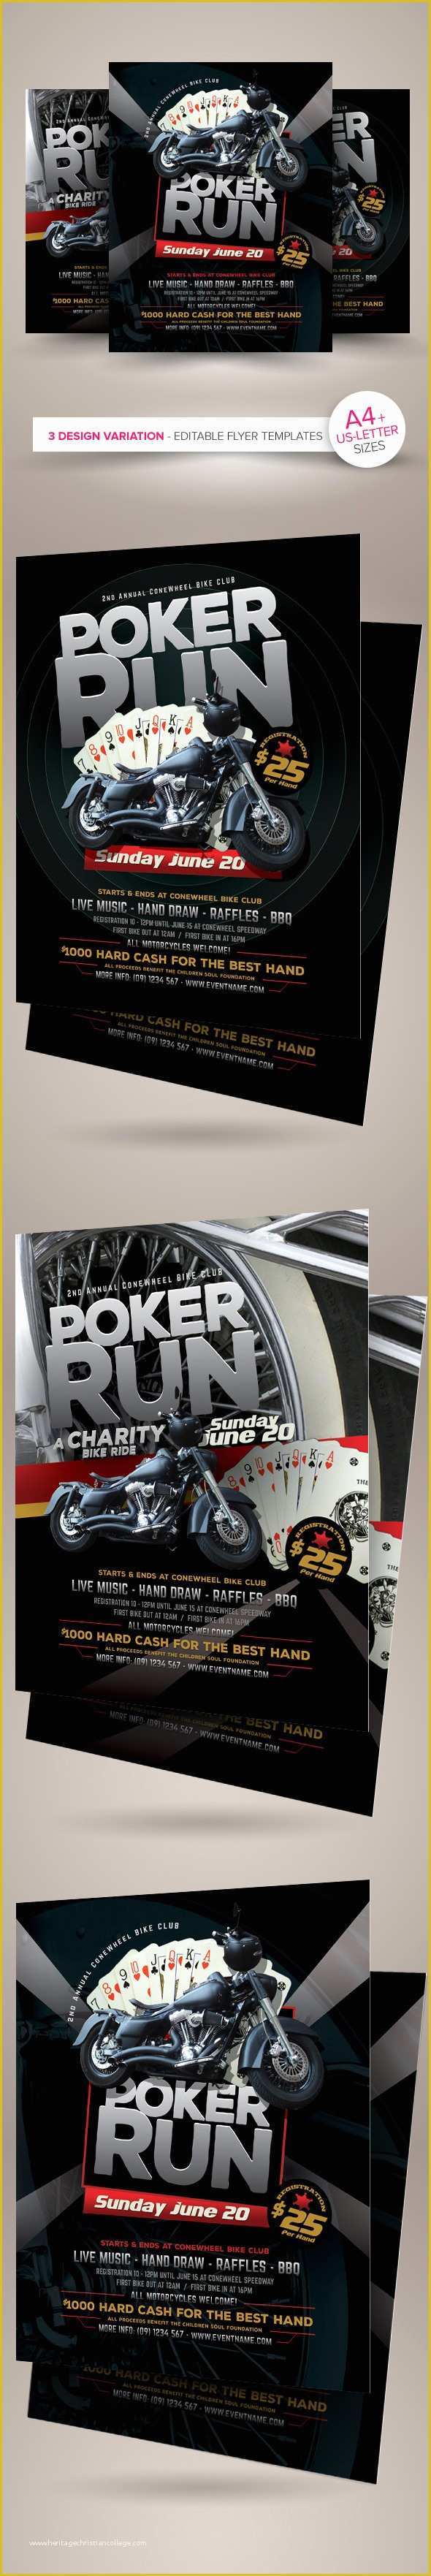 Poker Run Flyer Template Free Of Poker Run Flyer Templates On Behance